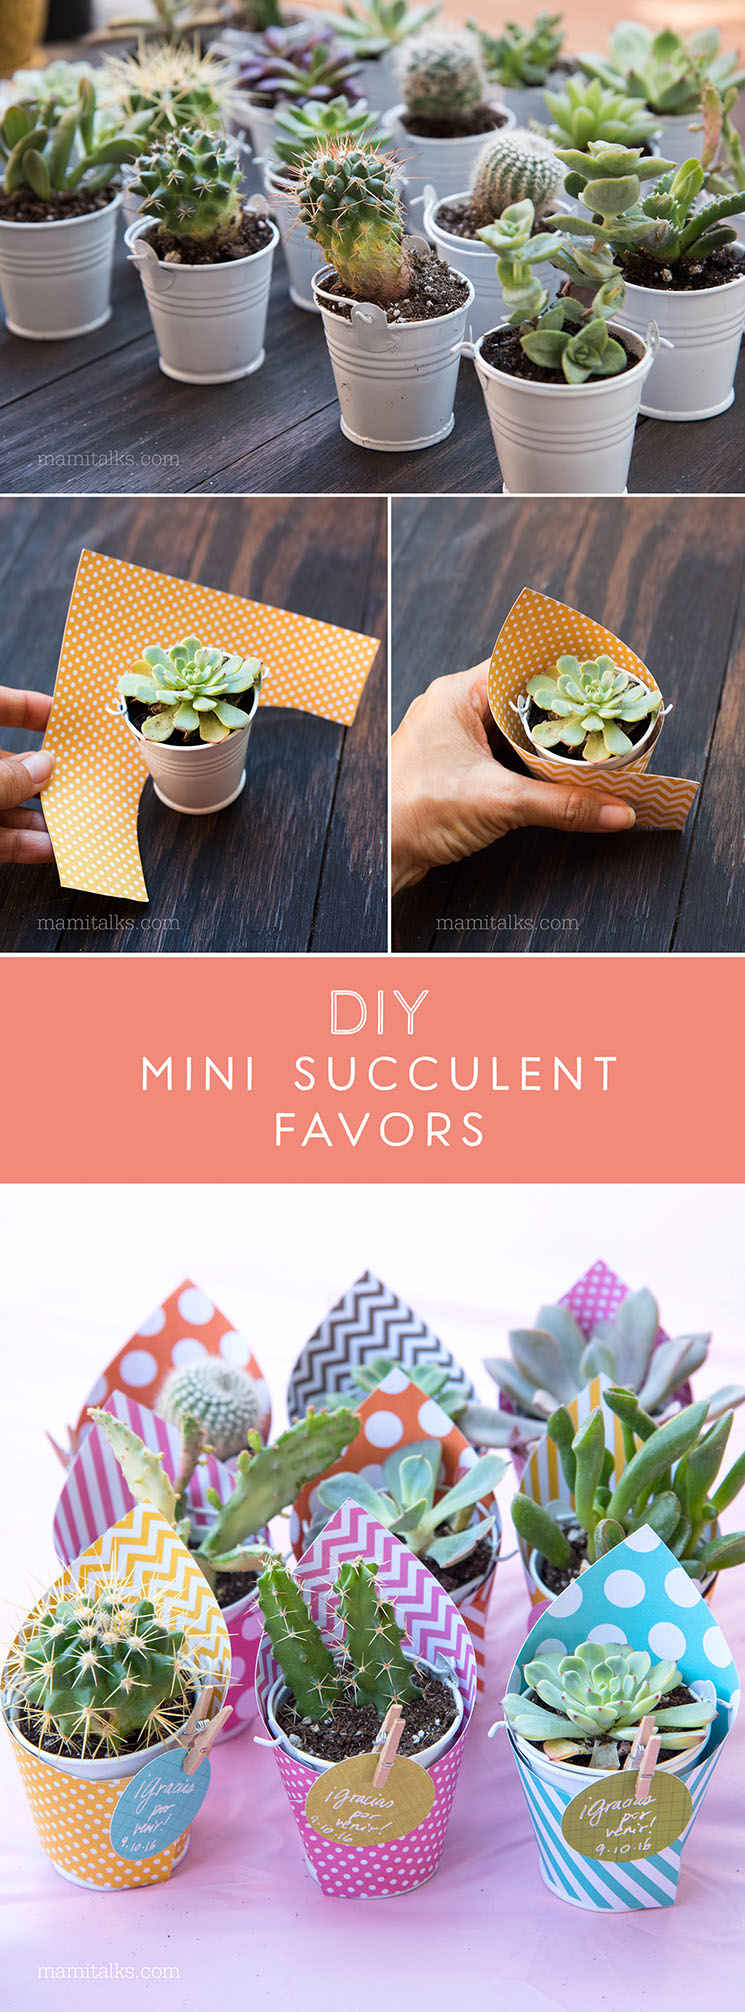 DIY mini succulent and cactus favors, step-by-step photos and group photos. -MamiTalks.com